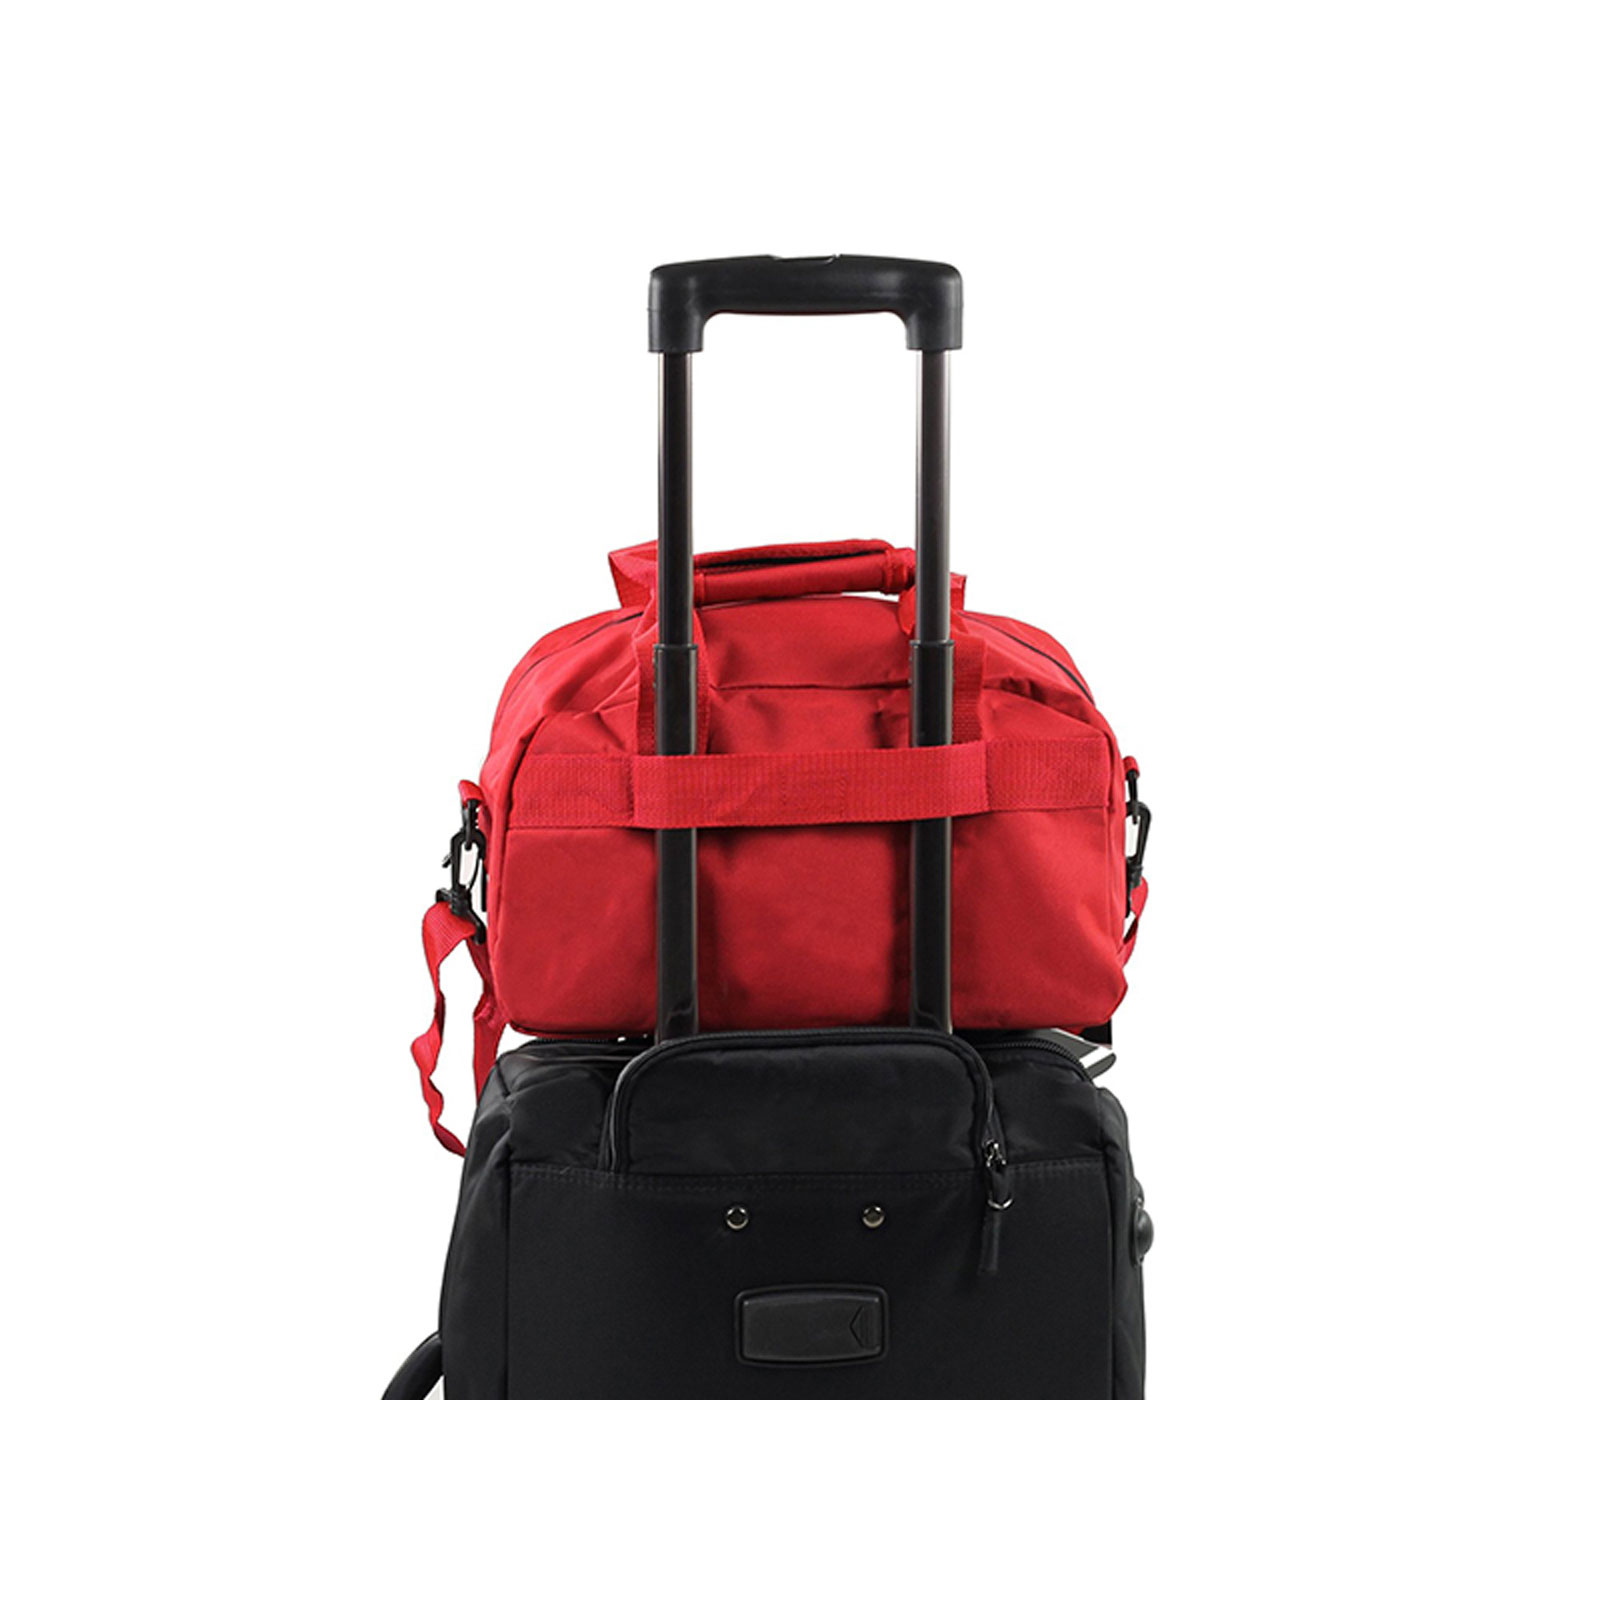 Сумка дорожная Members Essential On-Board Travel Bag 12.5 Red Polka (SB-0043-RP) изображение 4